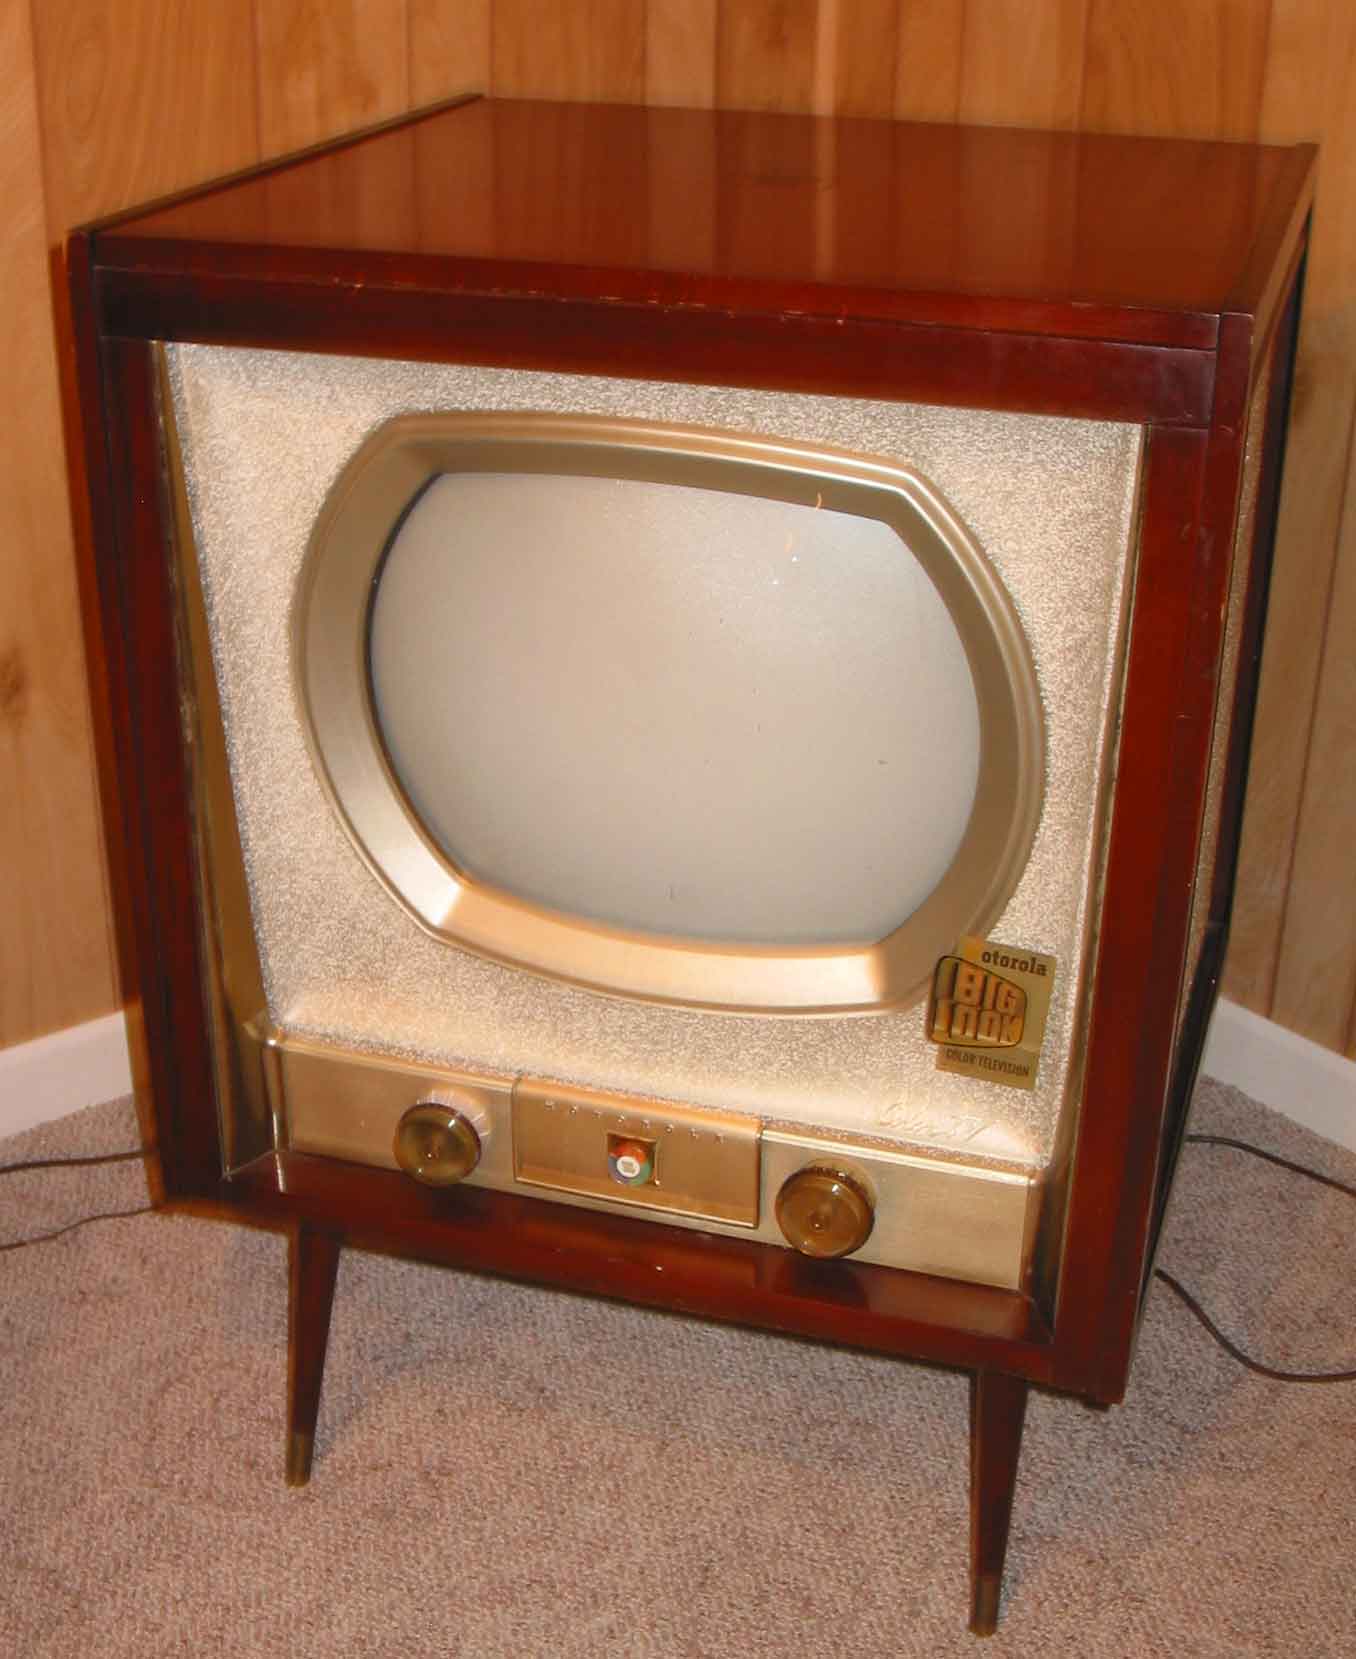 Motorola model 19Ck2 TV